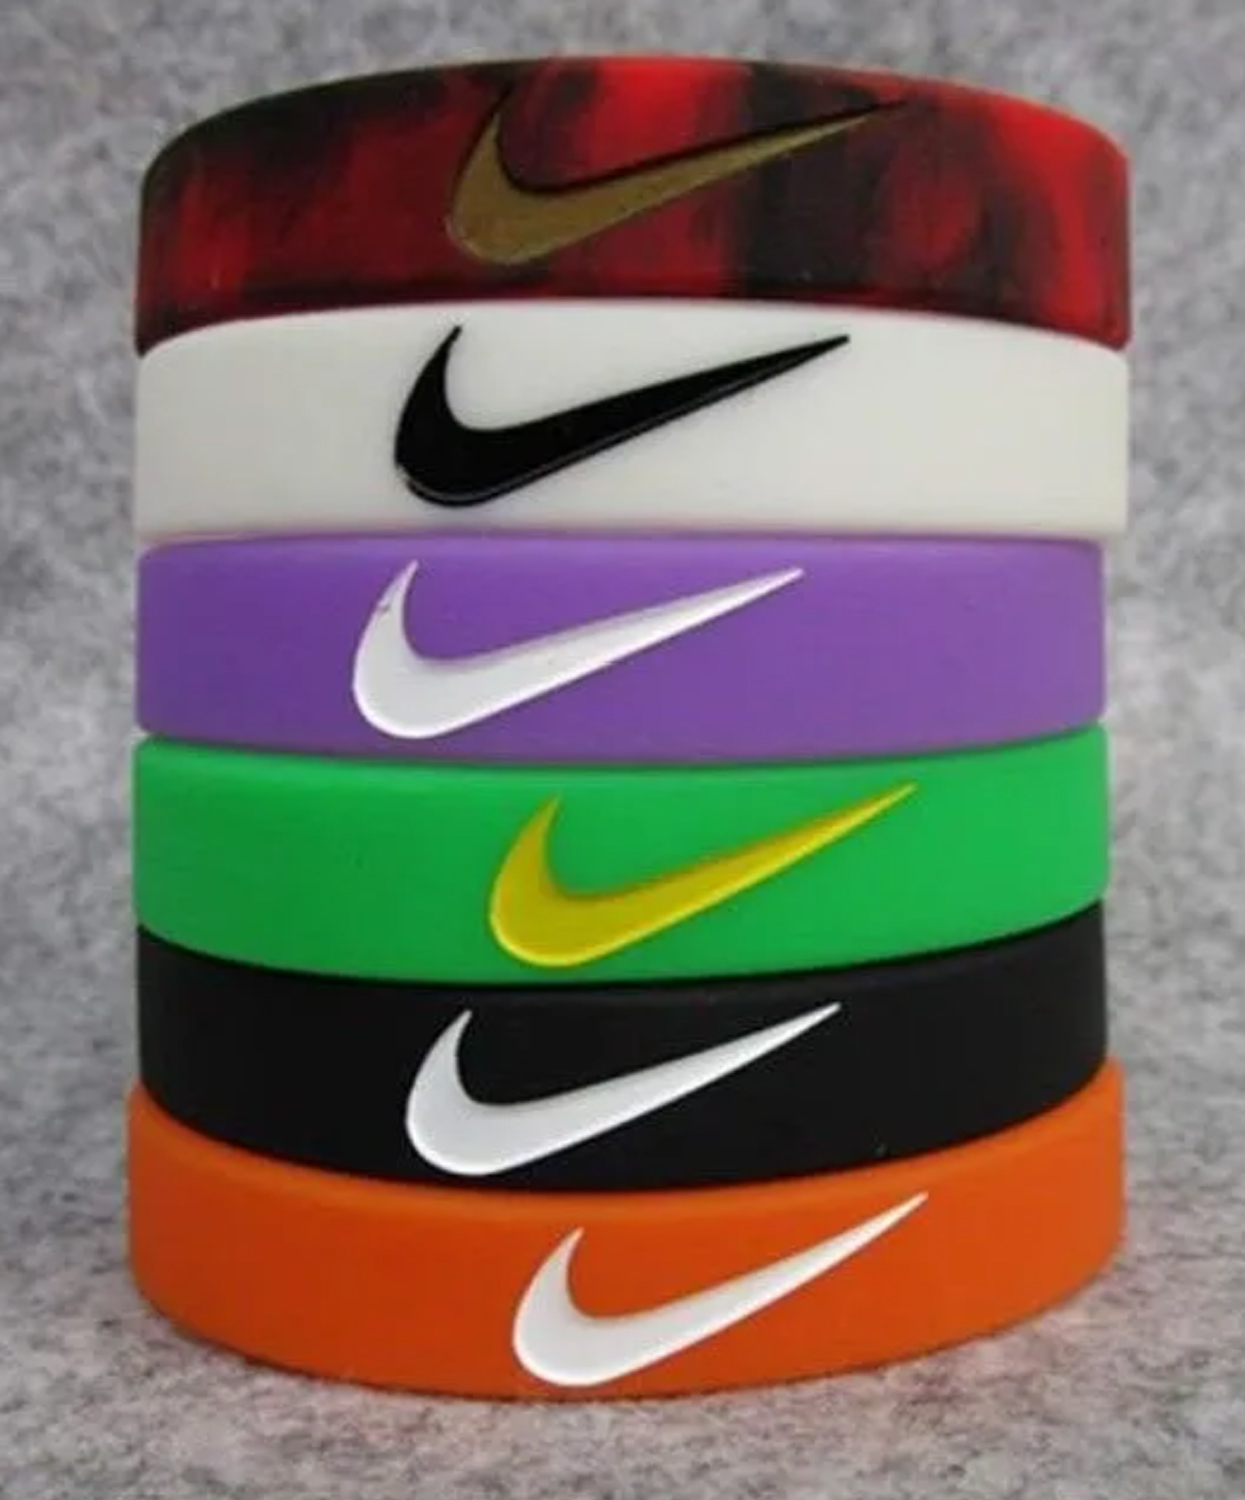 Sports wristbands for branding - 24hourwristbands Blog